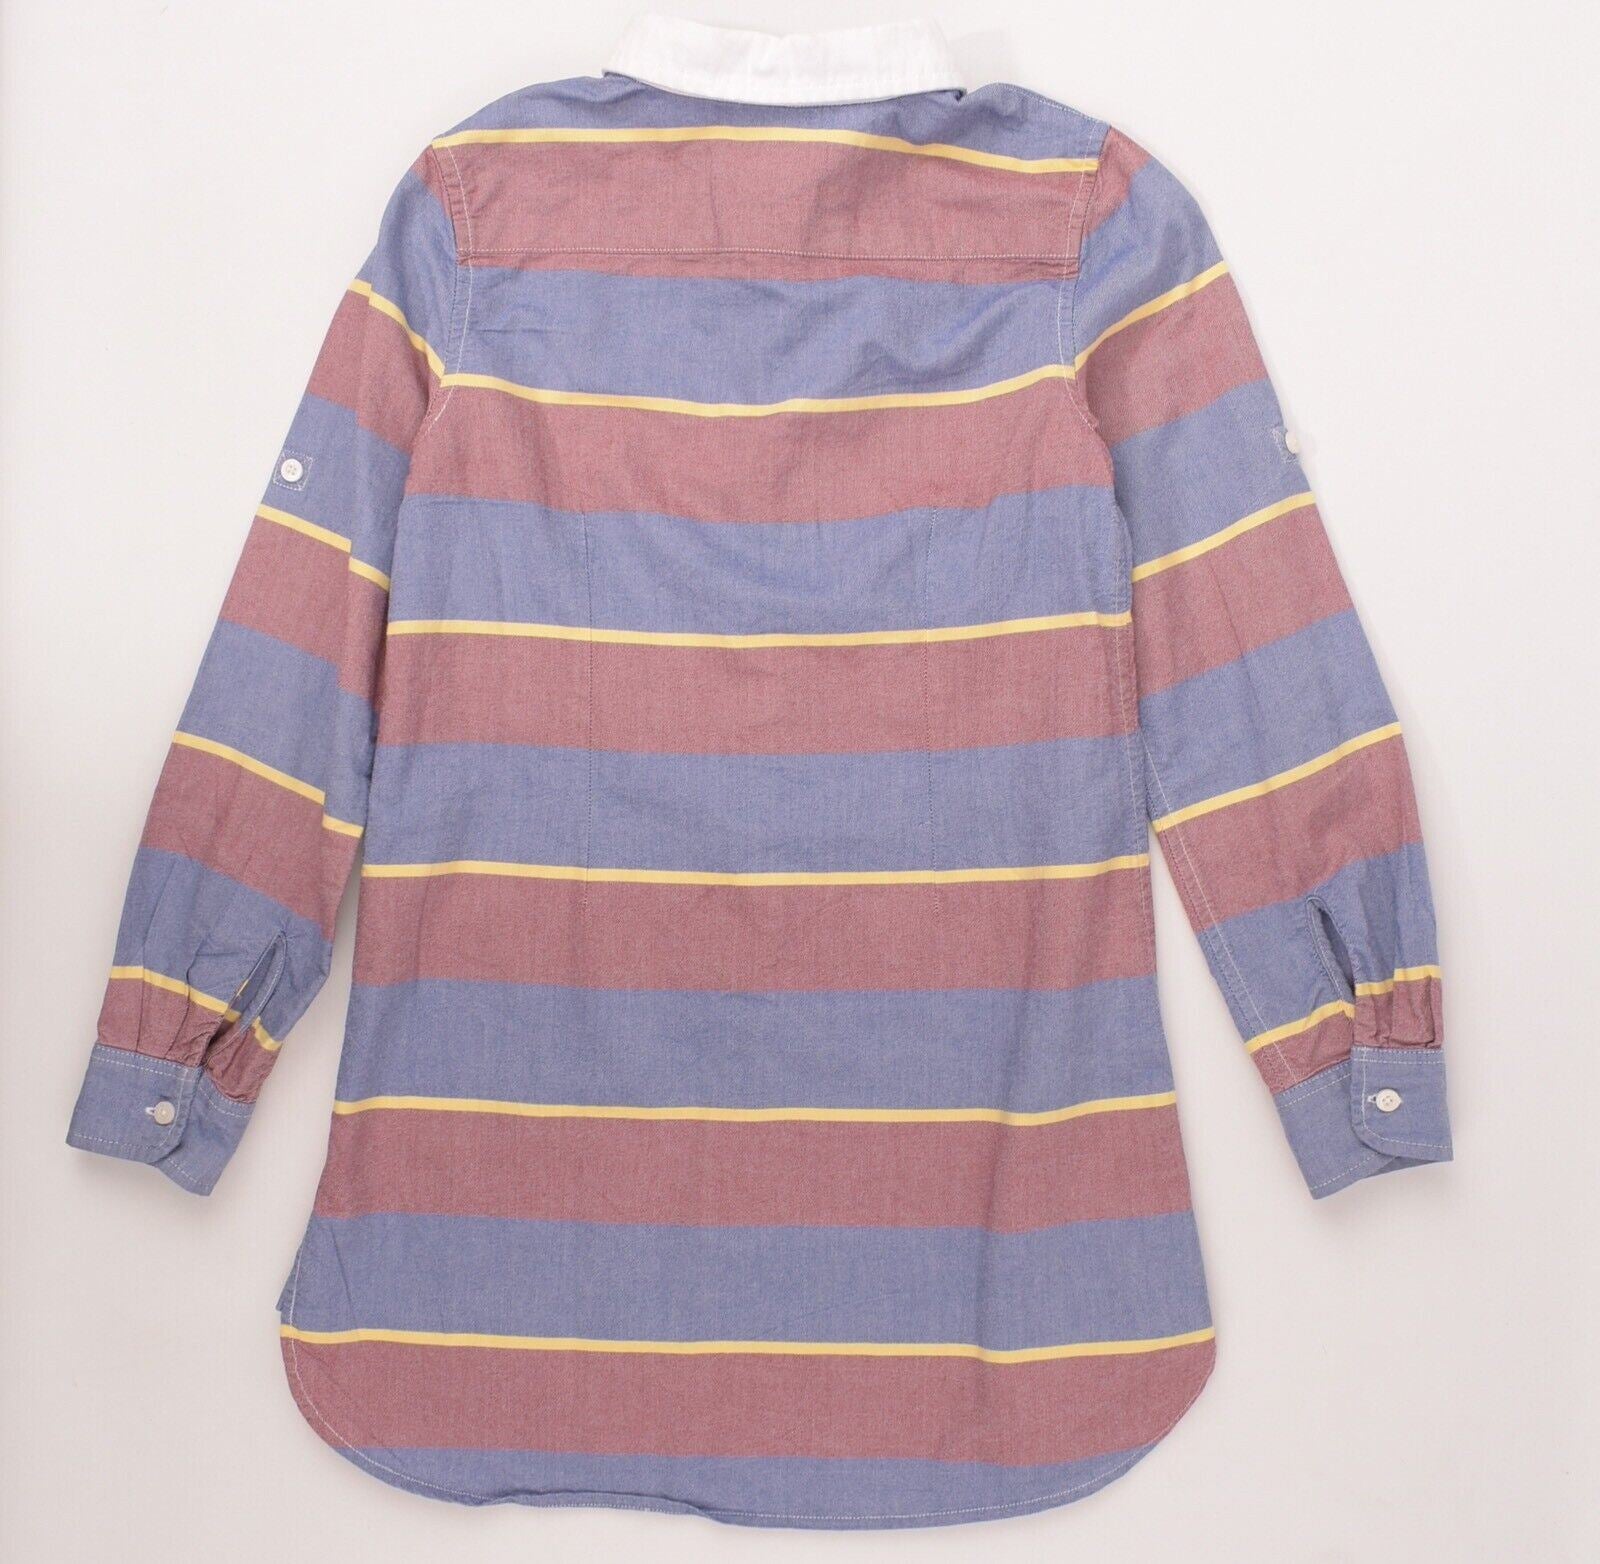 RALPH LAUREN Boys' Kids' Striped Shirt Top, Red/Blue, size 8 years